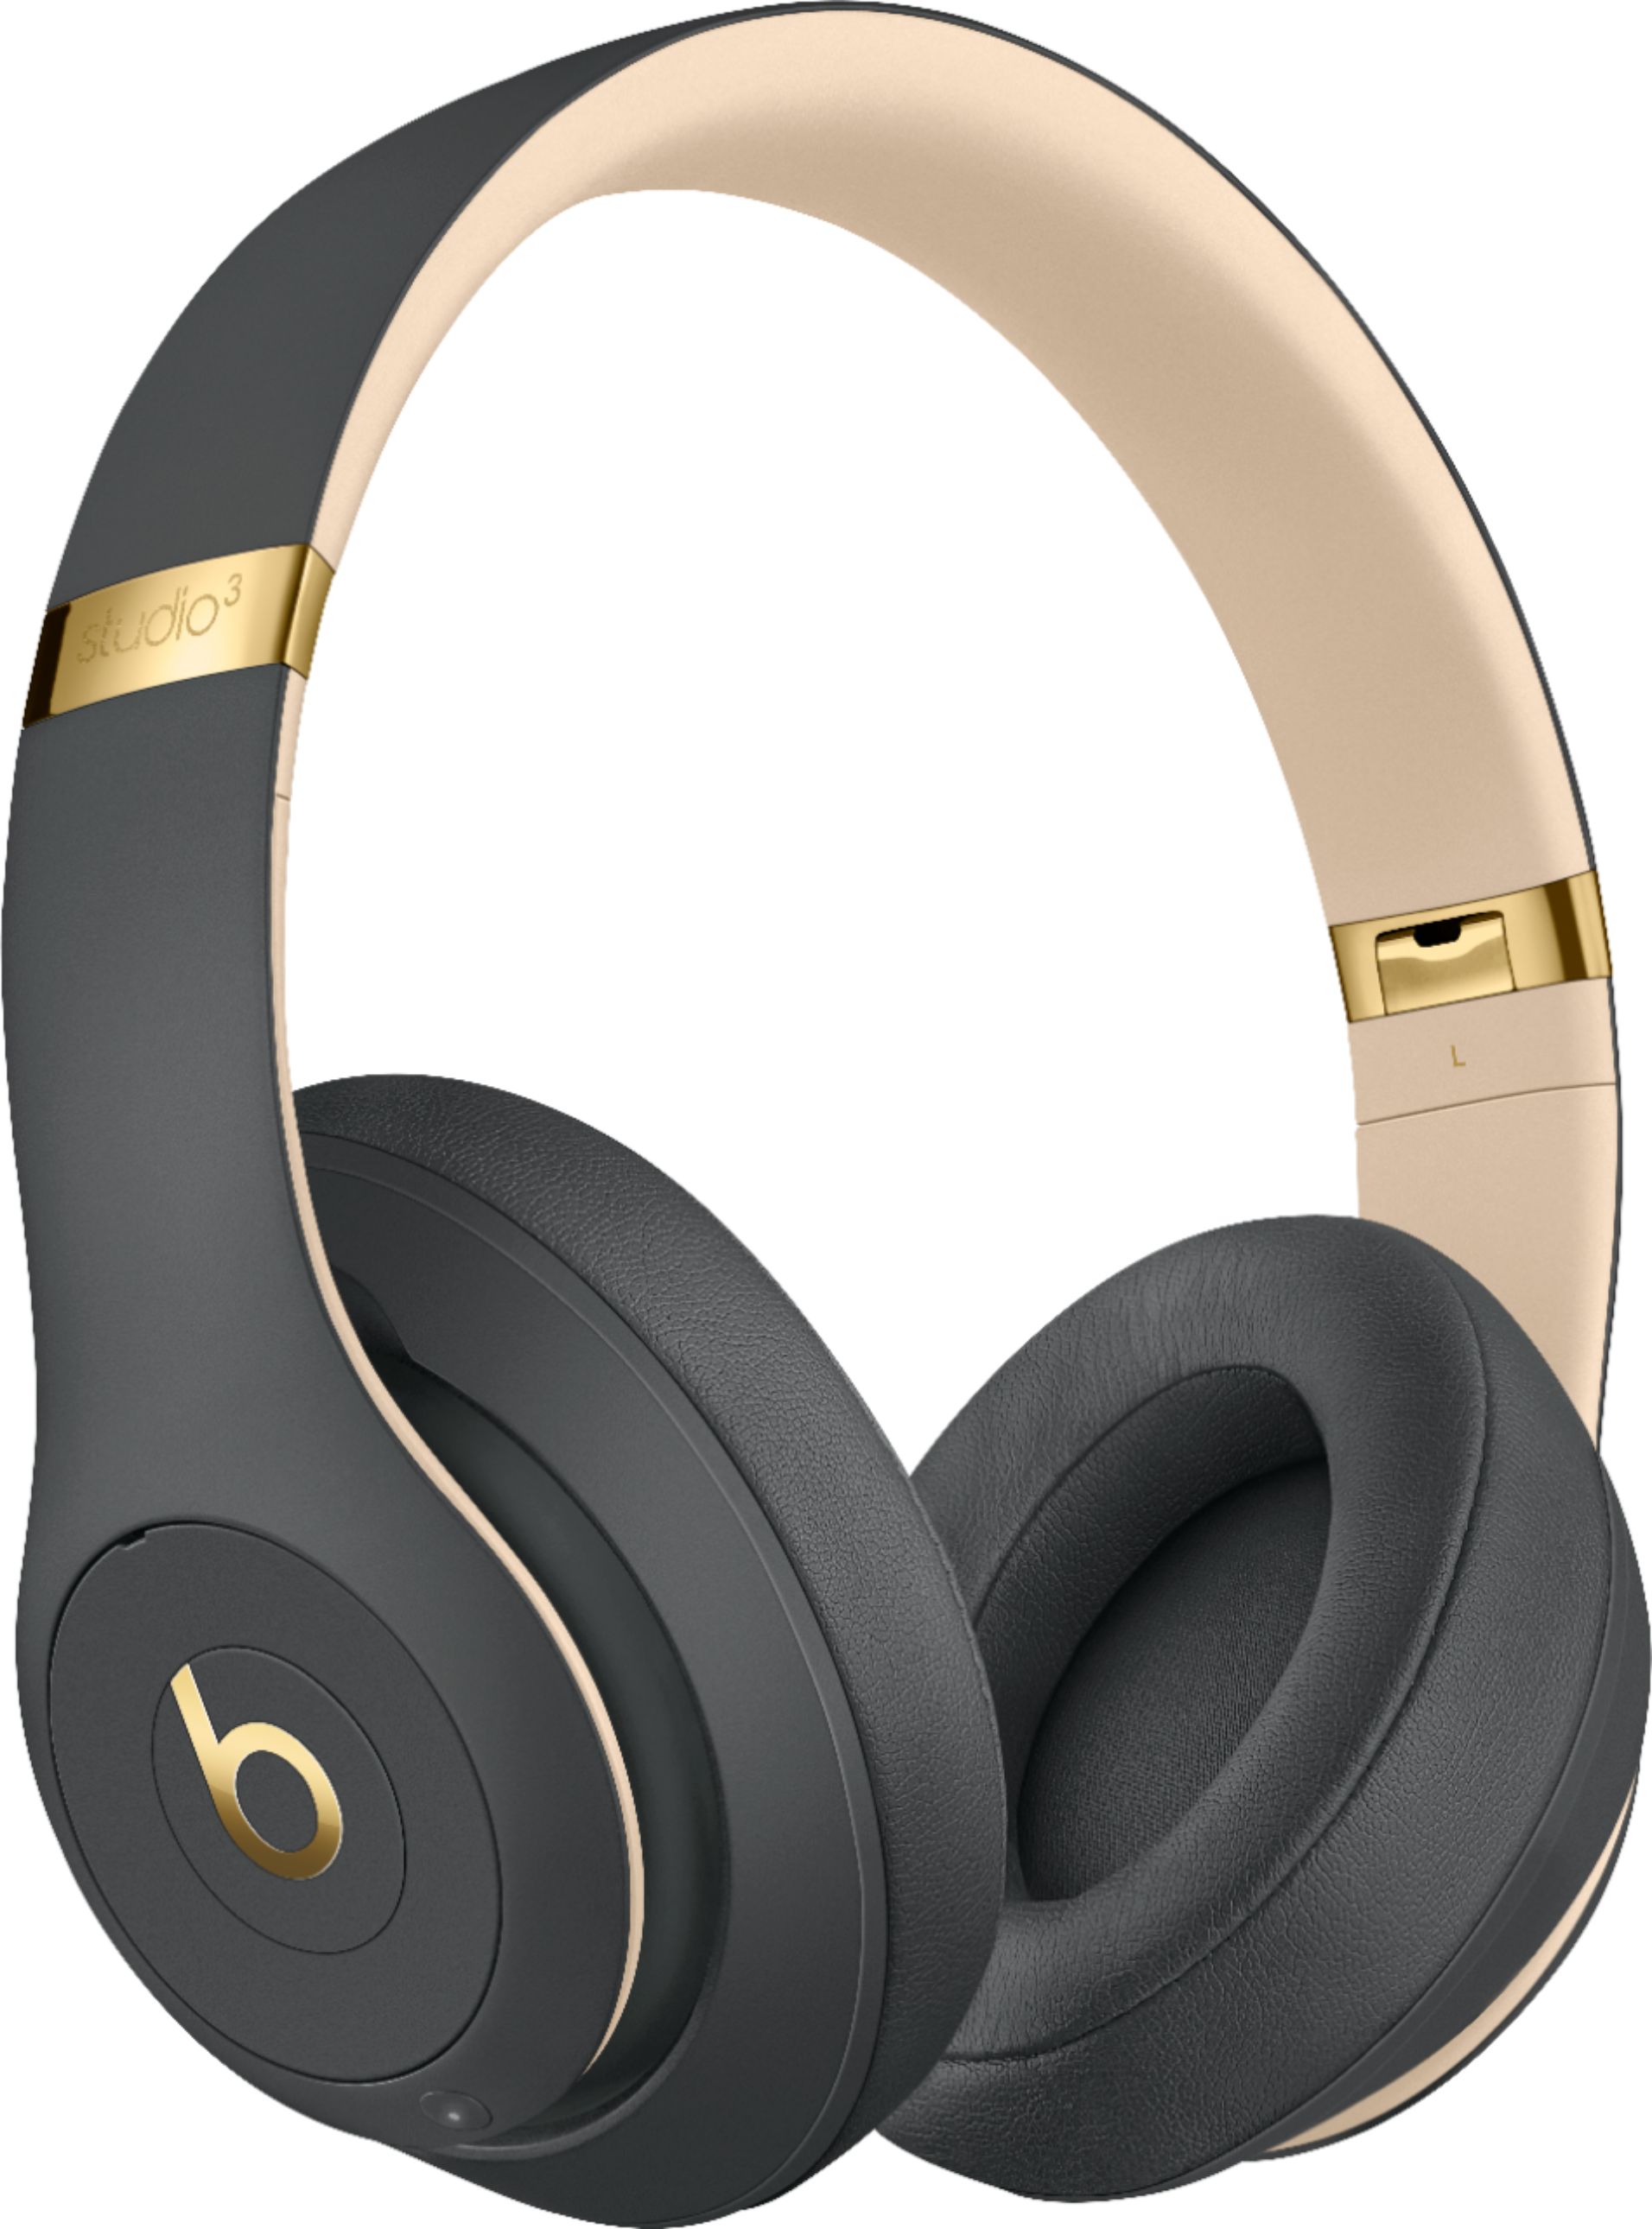 Beats by Dr. Dre Beats Studio³ Wireless Noise Cancelling Headphones Gray MXJ92LL/A - Best